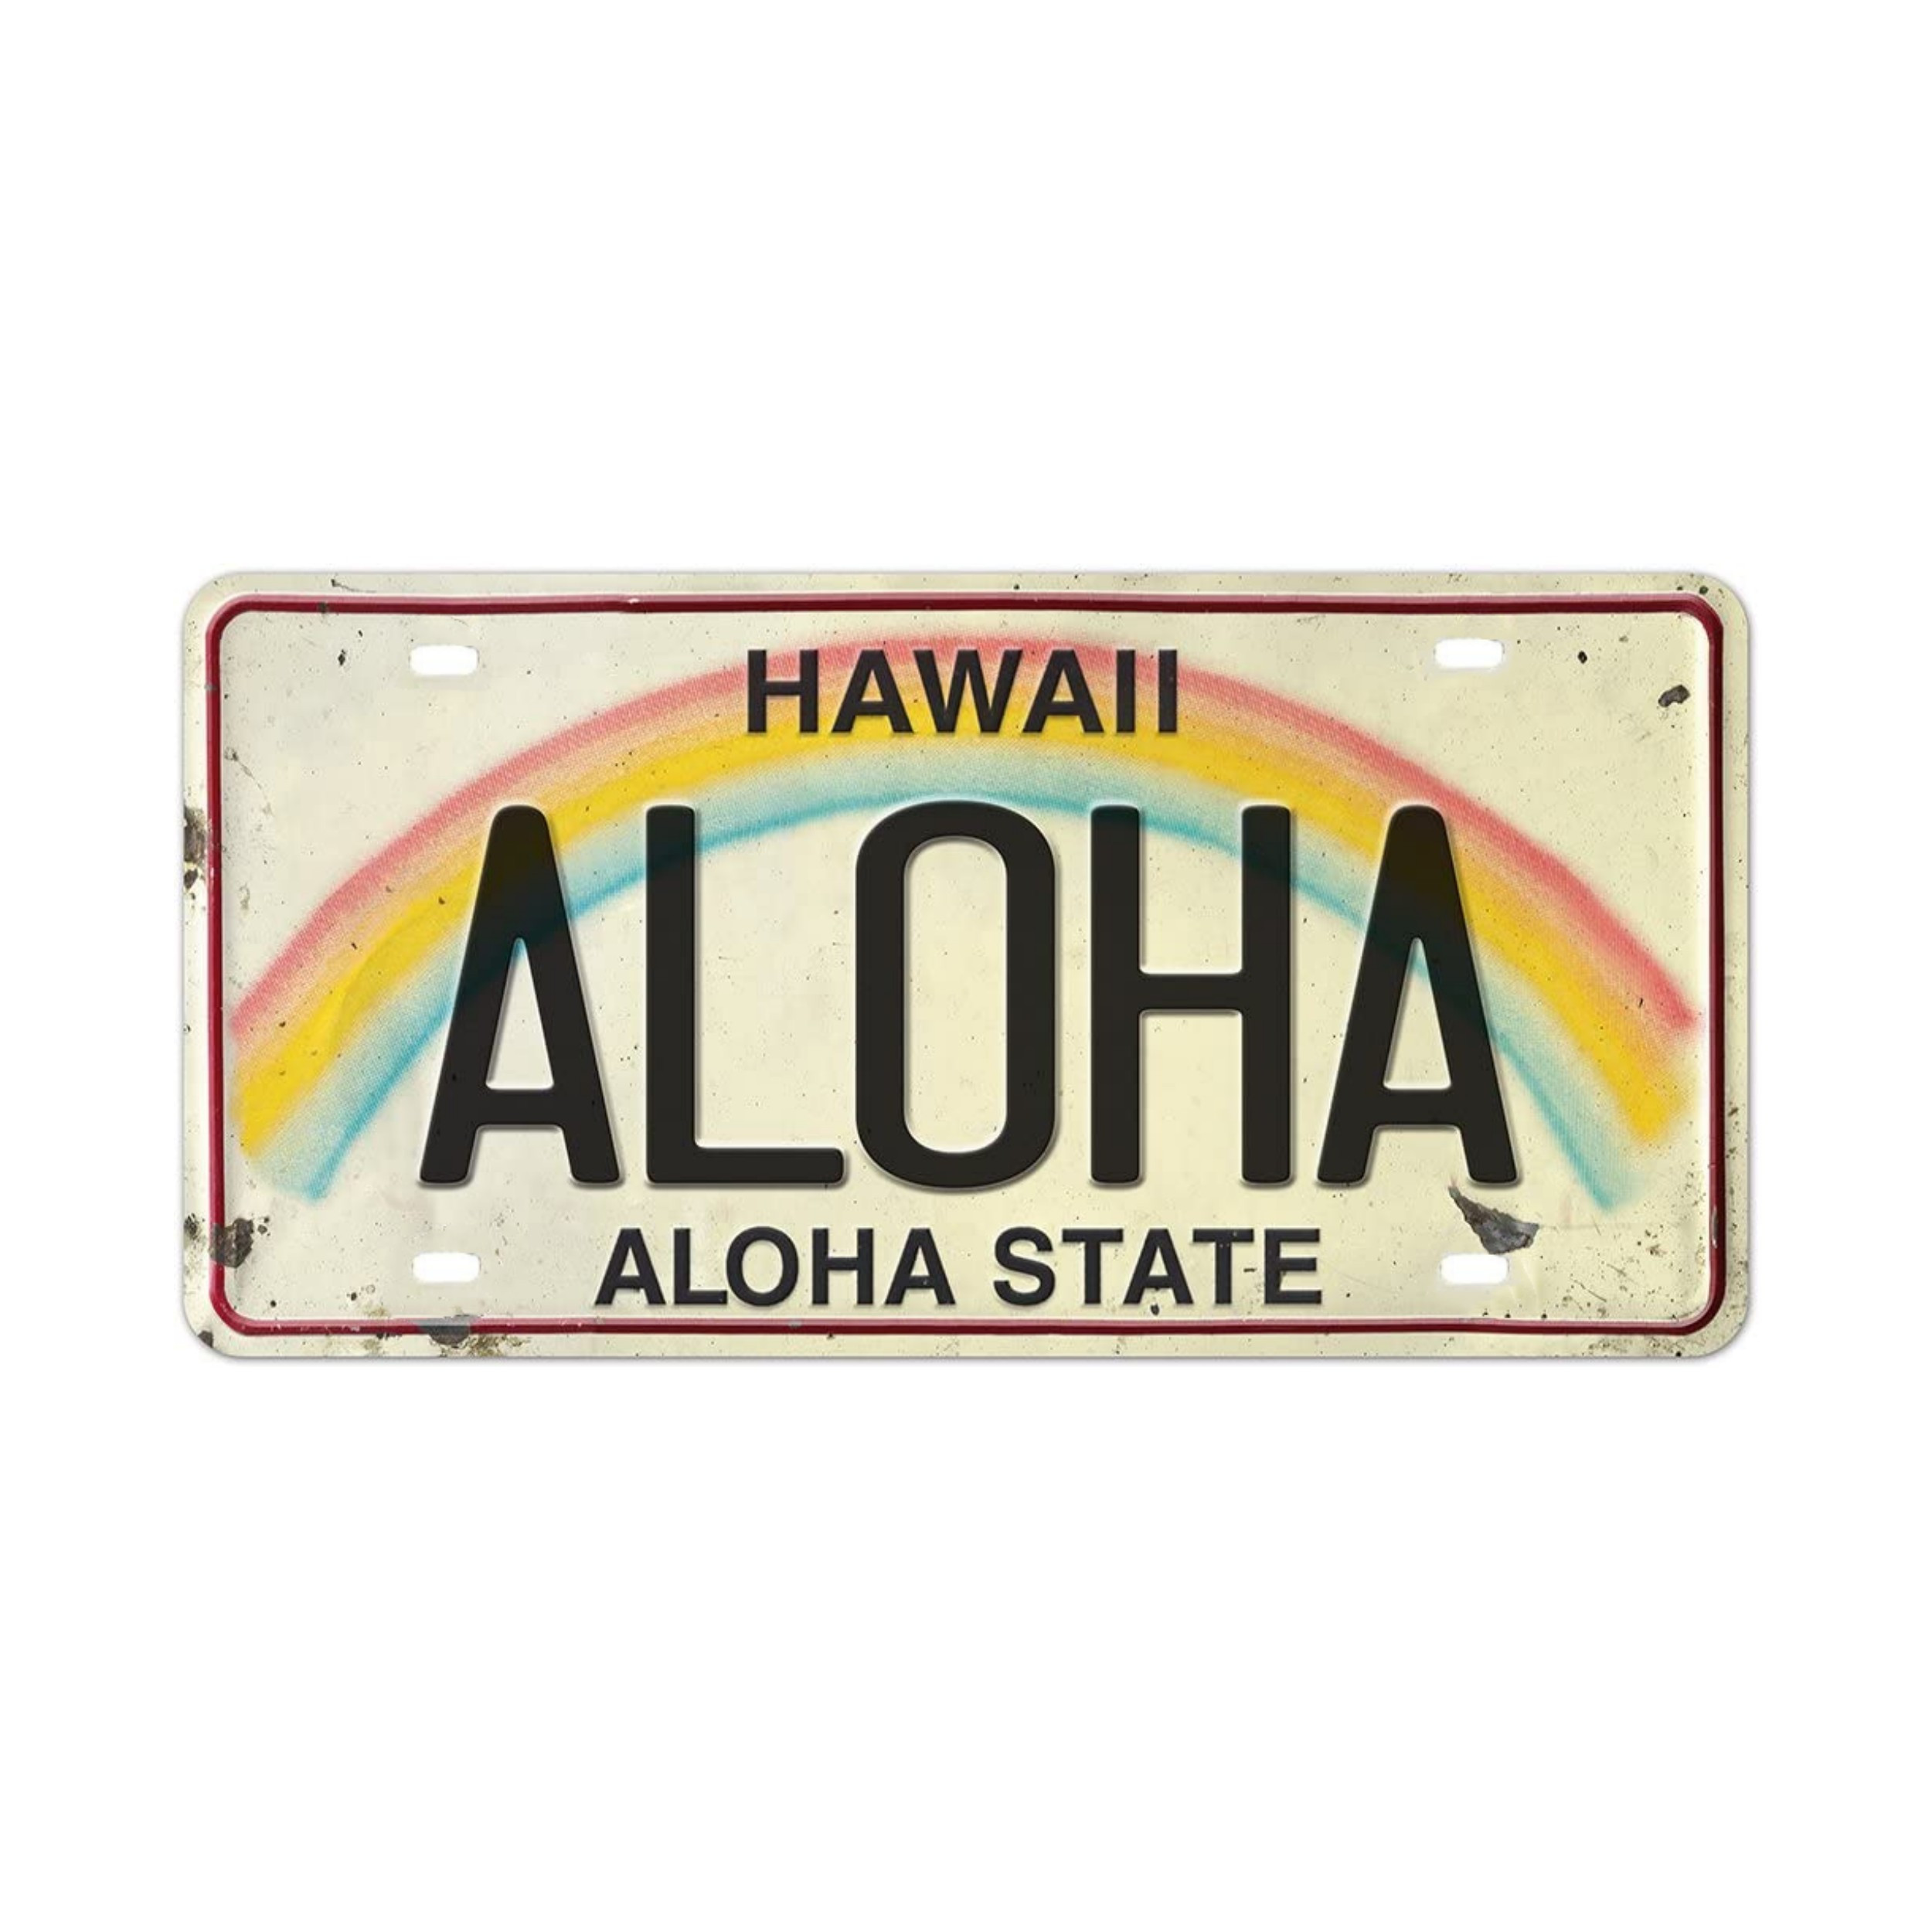 1pc, "Hawaii Aloha State - Aloha" Metal Licence Plate Tin Sign (12''x6''), Vintage Plaque Decor, Home Decor, Room Decor, Wall Decor, Restaurant Decor,